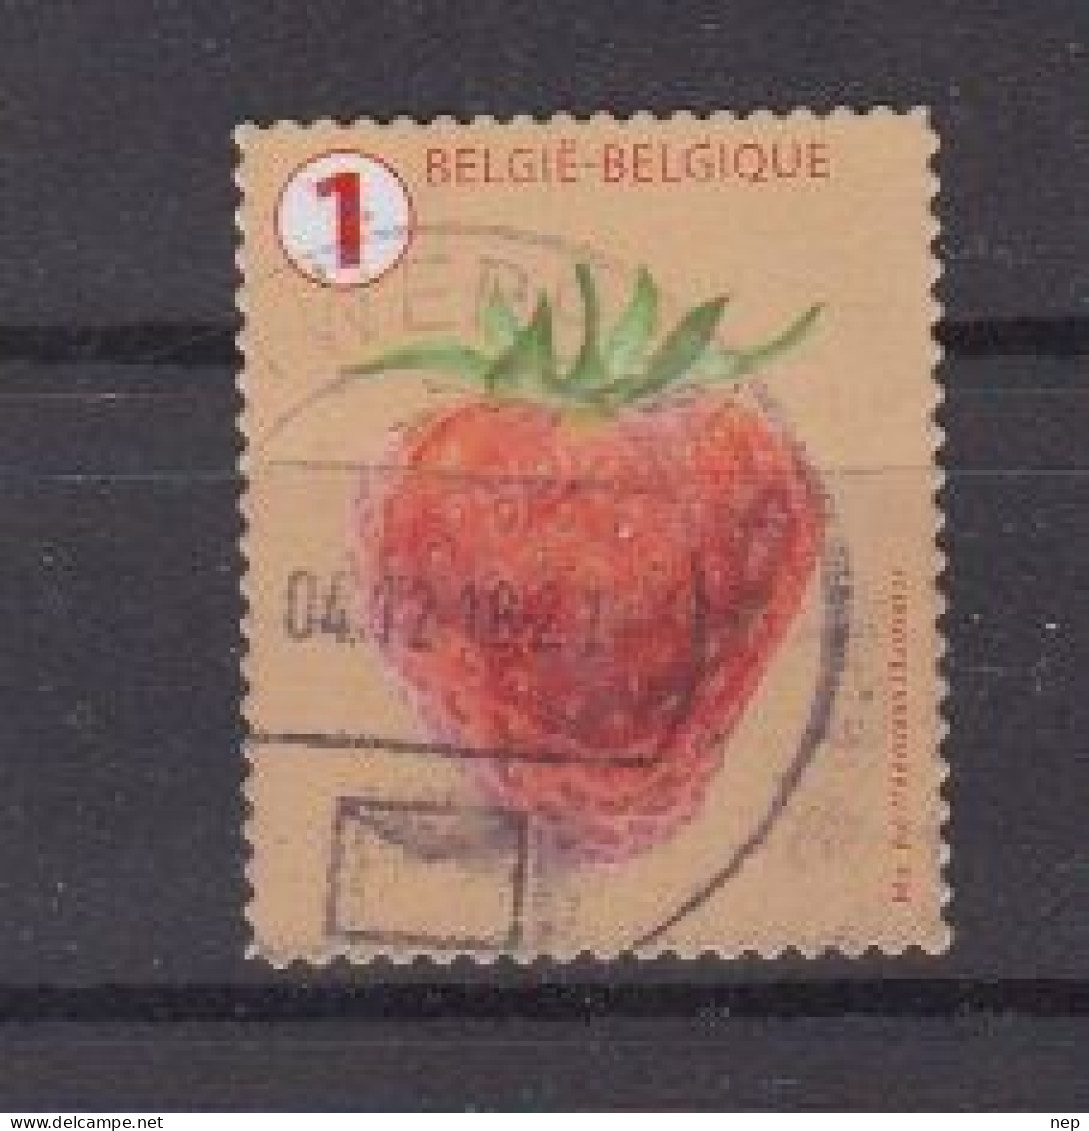 BELGIË - OPB - 2018 - R 149 (Fijne Tanding) - Gest/Obl/Us - Coil Stamps